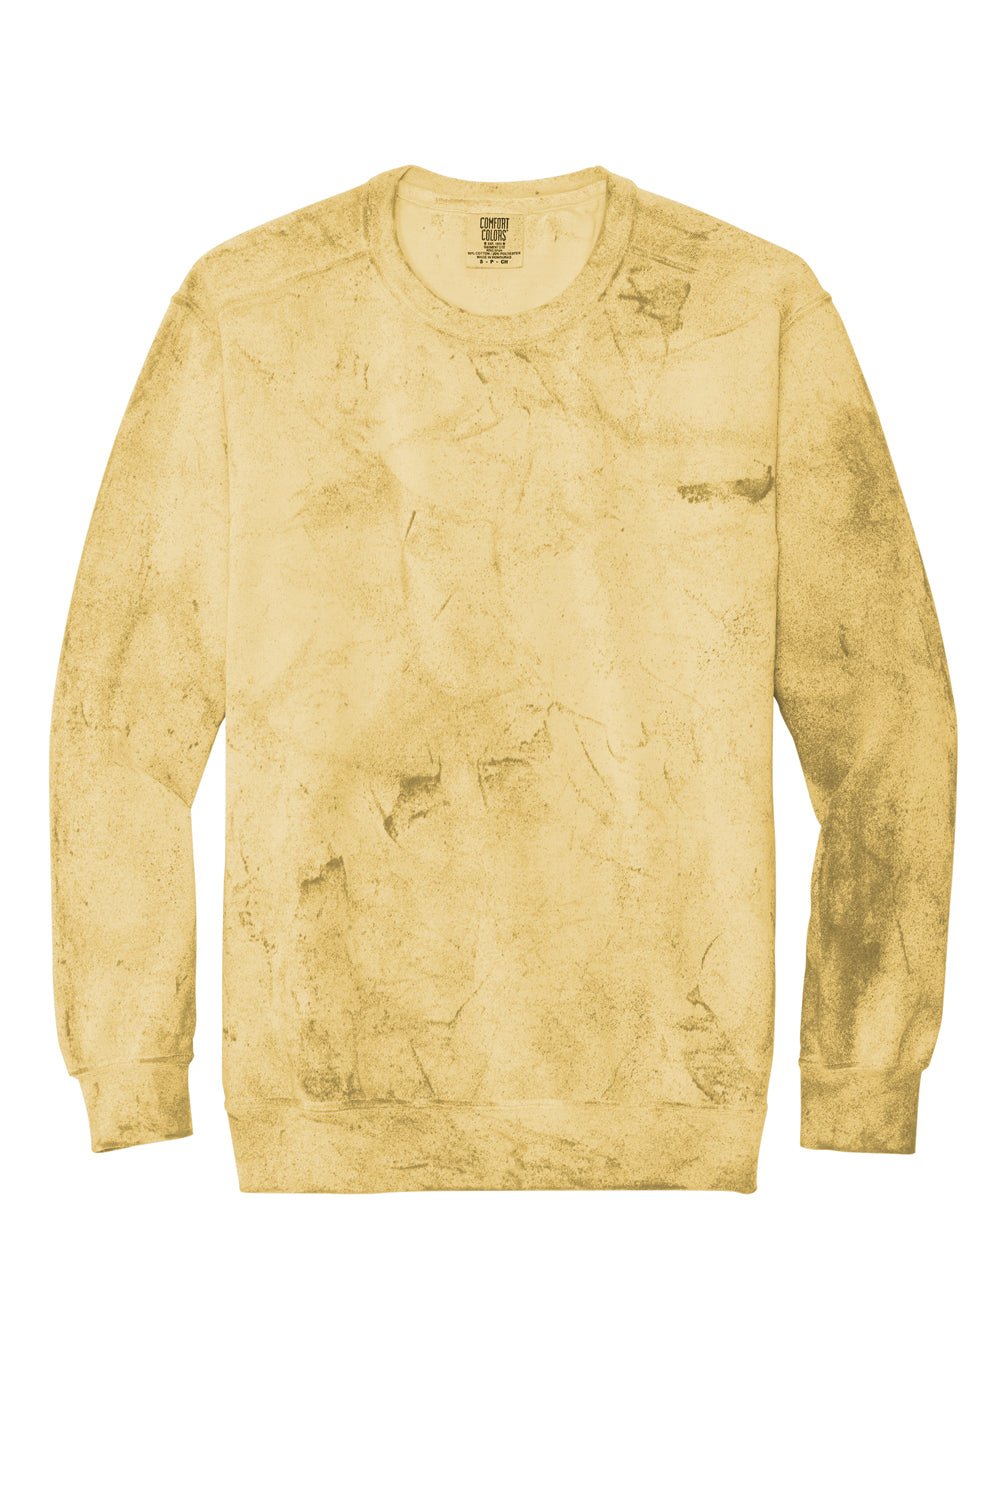 Comfort Colors 1545 Color Blast Crewneck Sweatshirt Citrine Yellow Flat Front